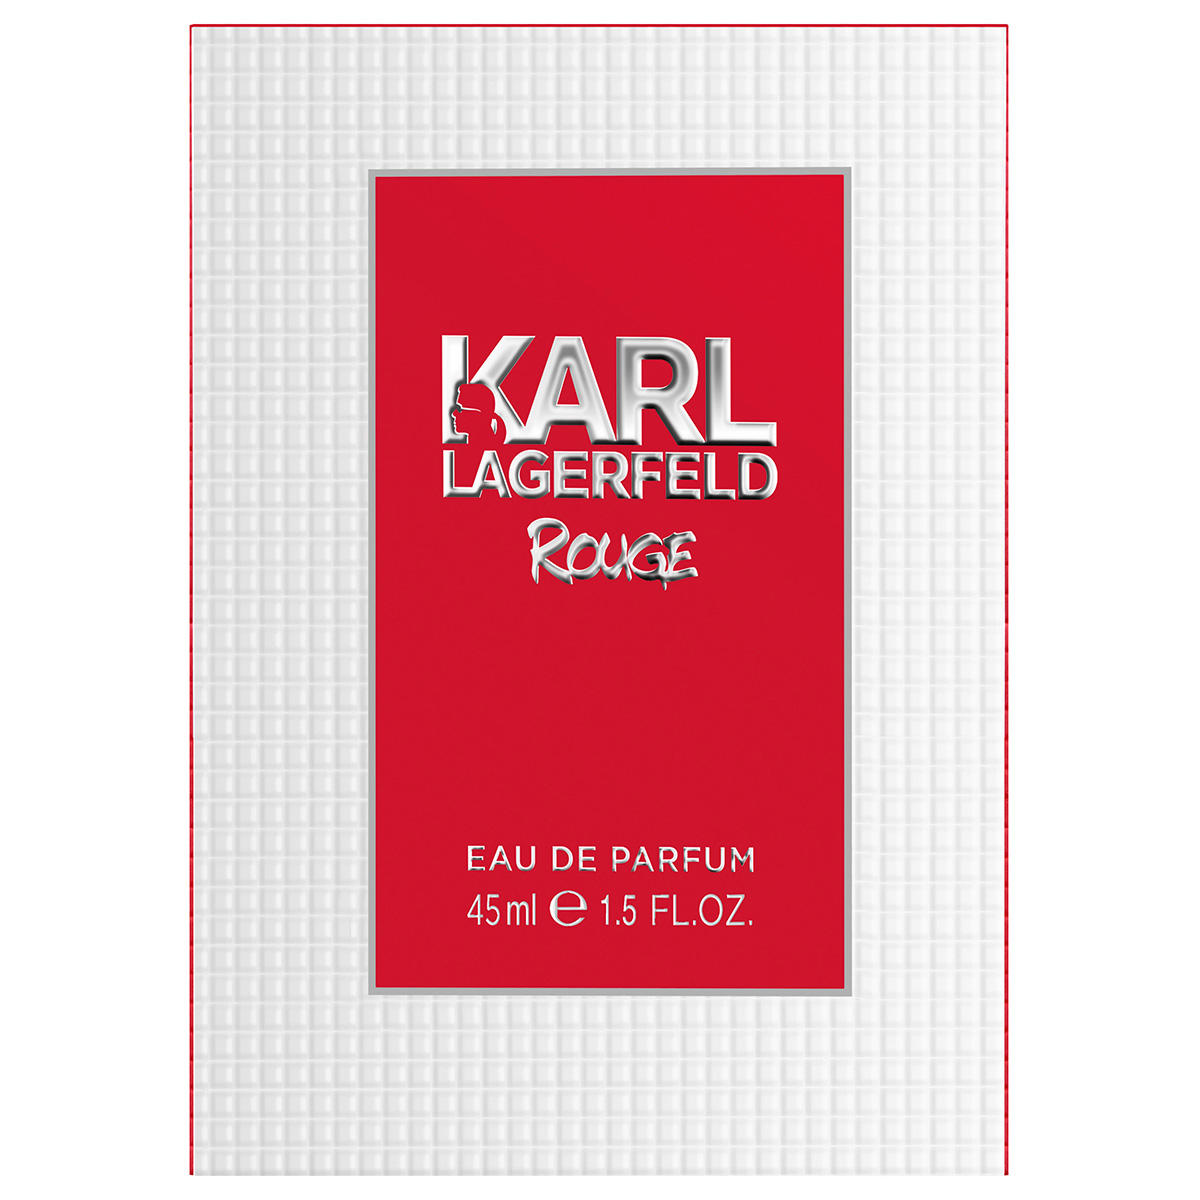 Karl Lagerfeld Rouge Eau de Parfum 45 ml - 2